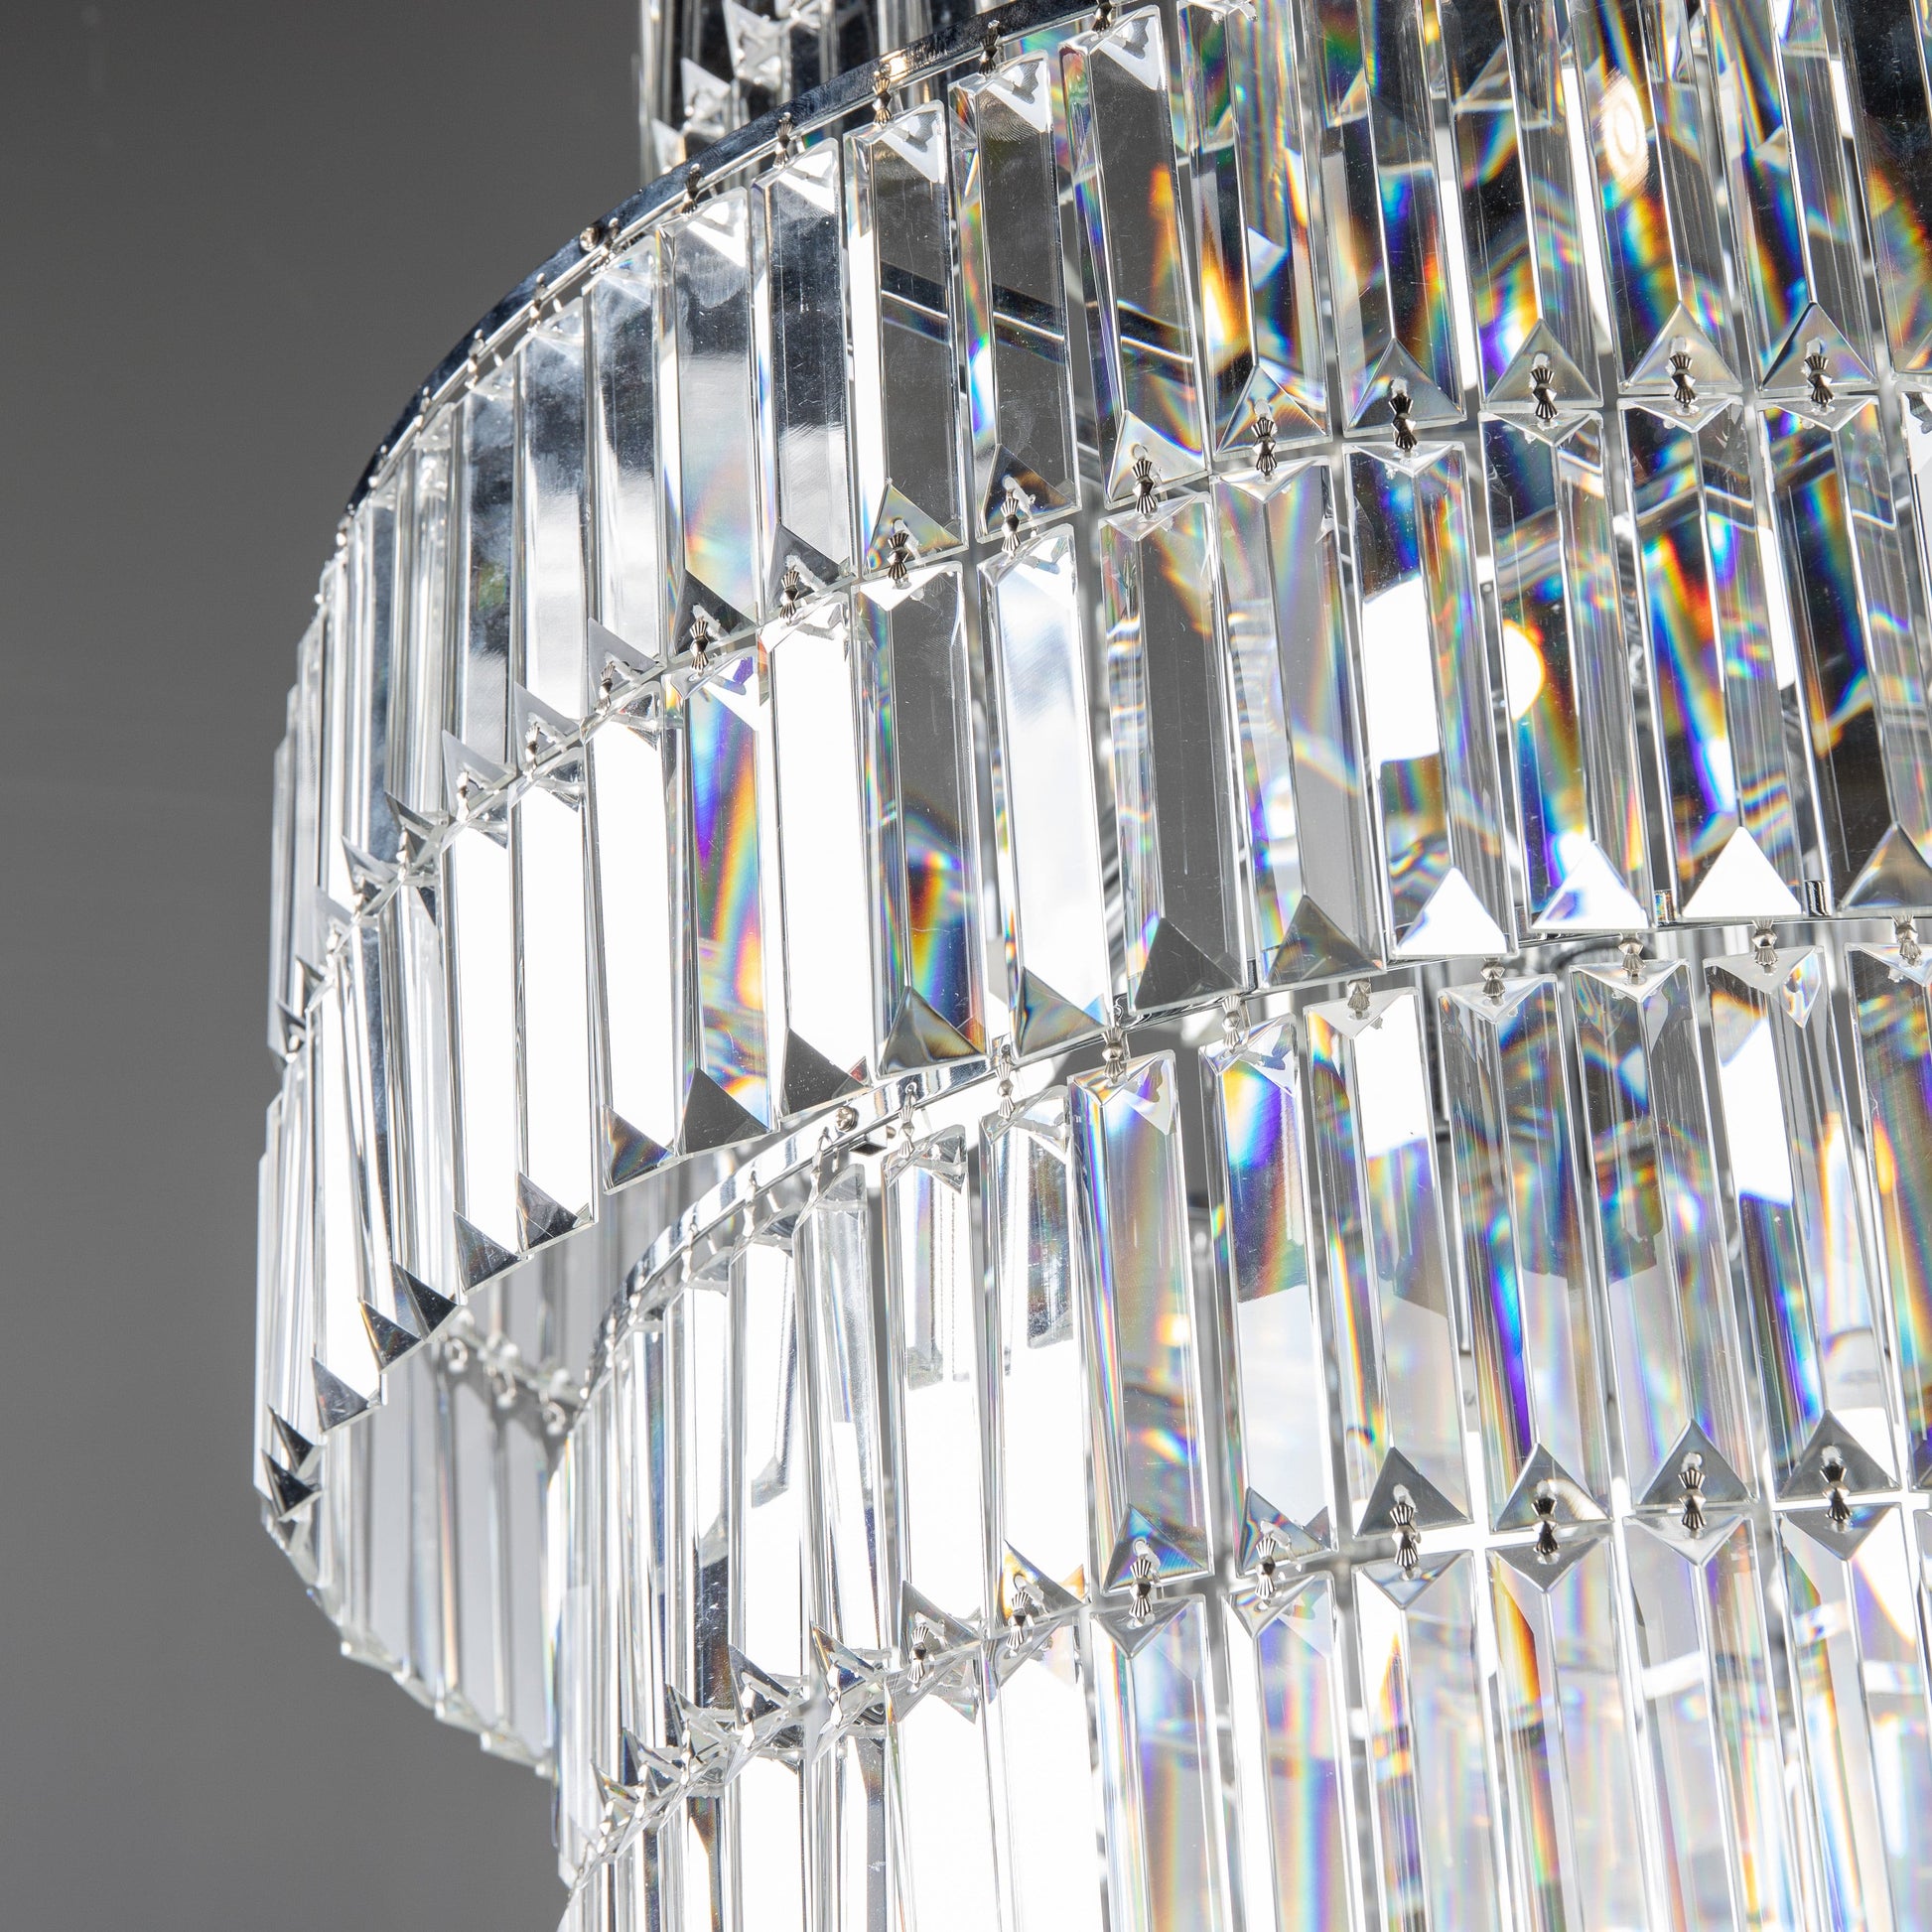 Lights  -  Prism Tall Crystal Pendant  -  60000150